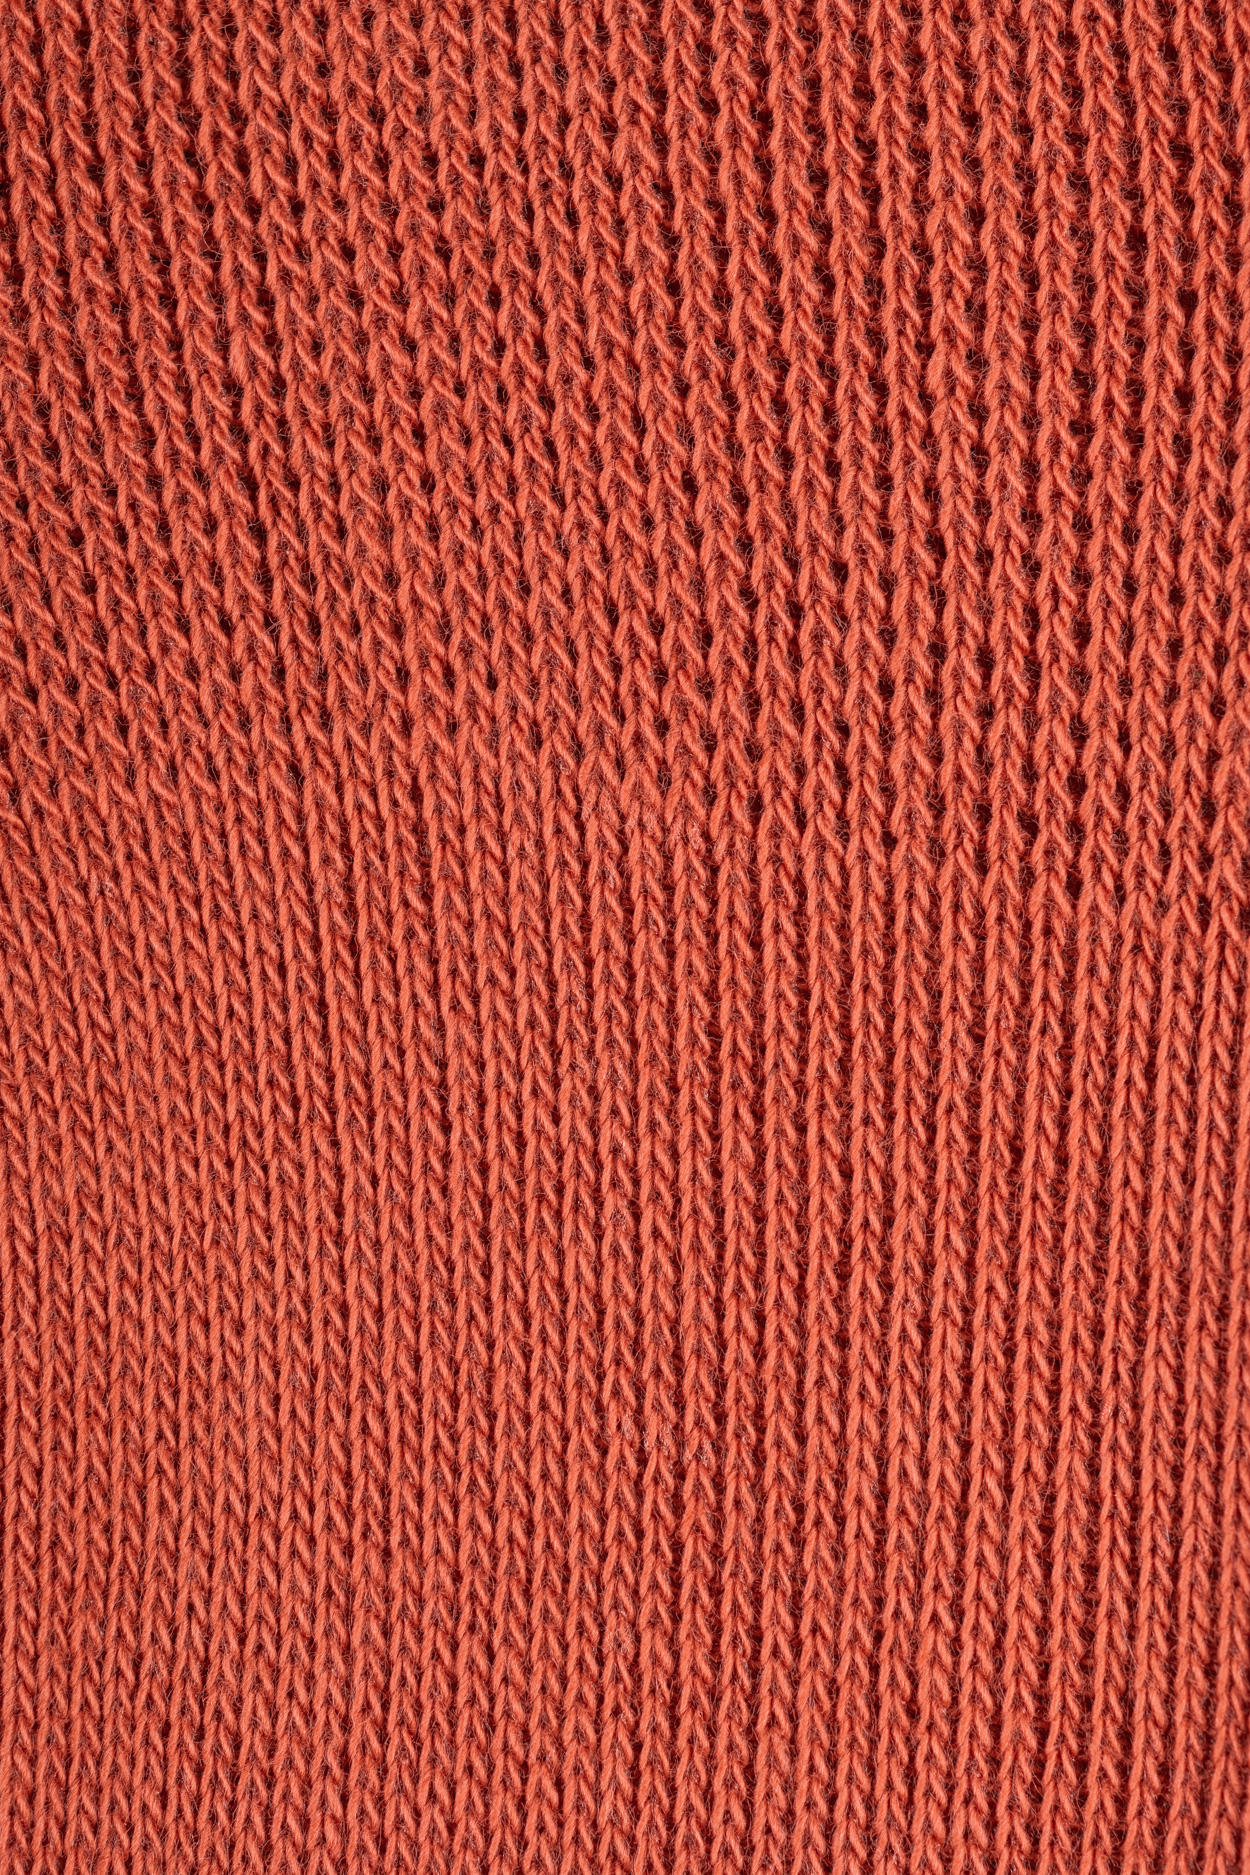 lavastone red